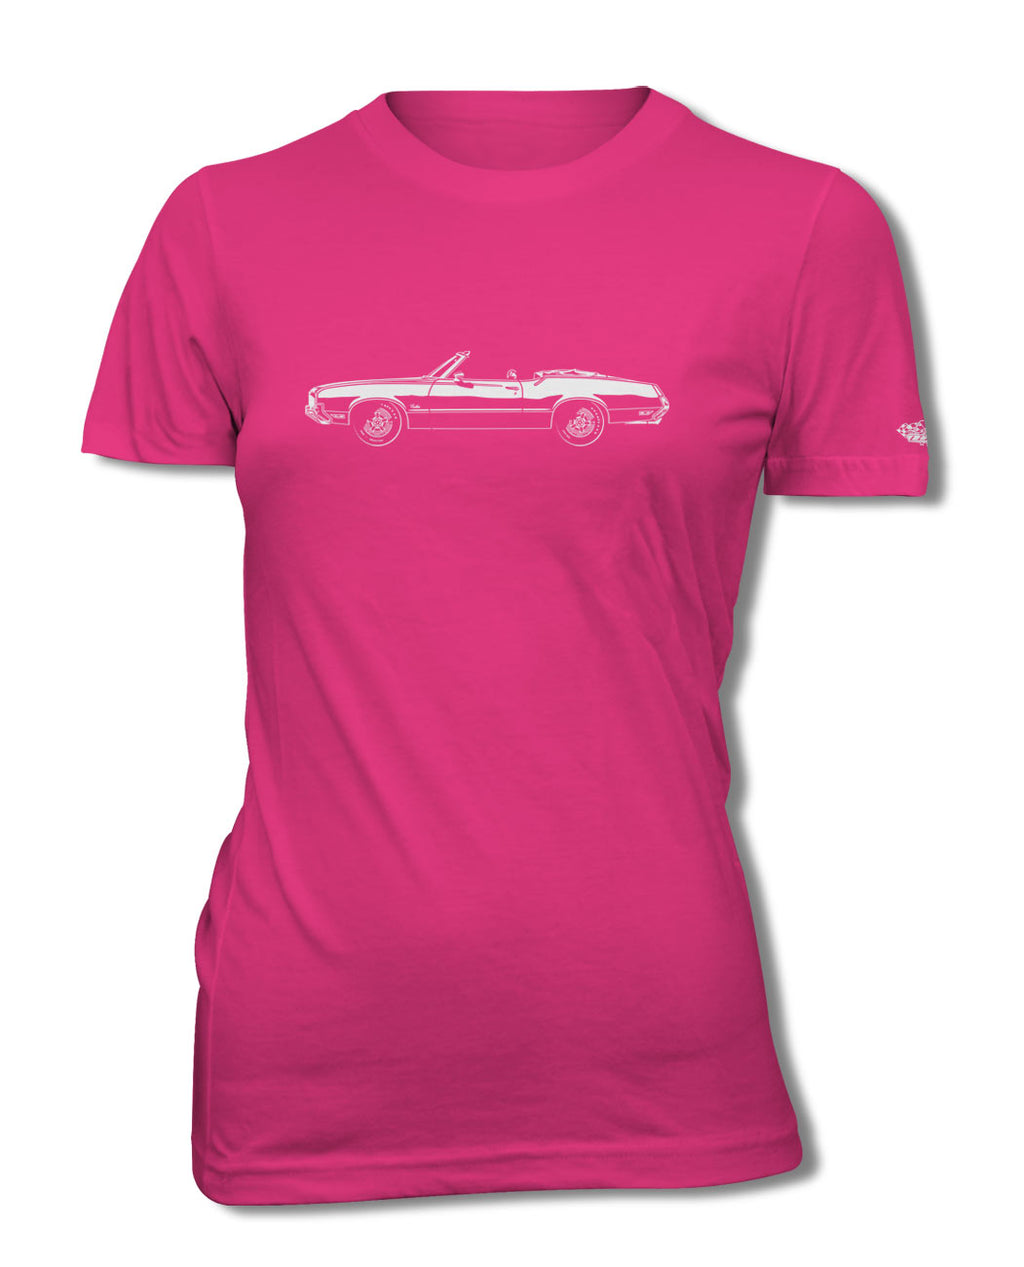 1971 Oldsmobile Cutlass Supreme Convertible T-Shirt - Women - Side View